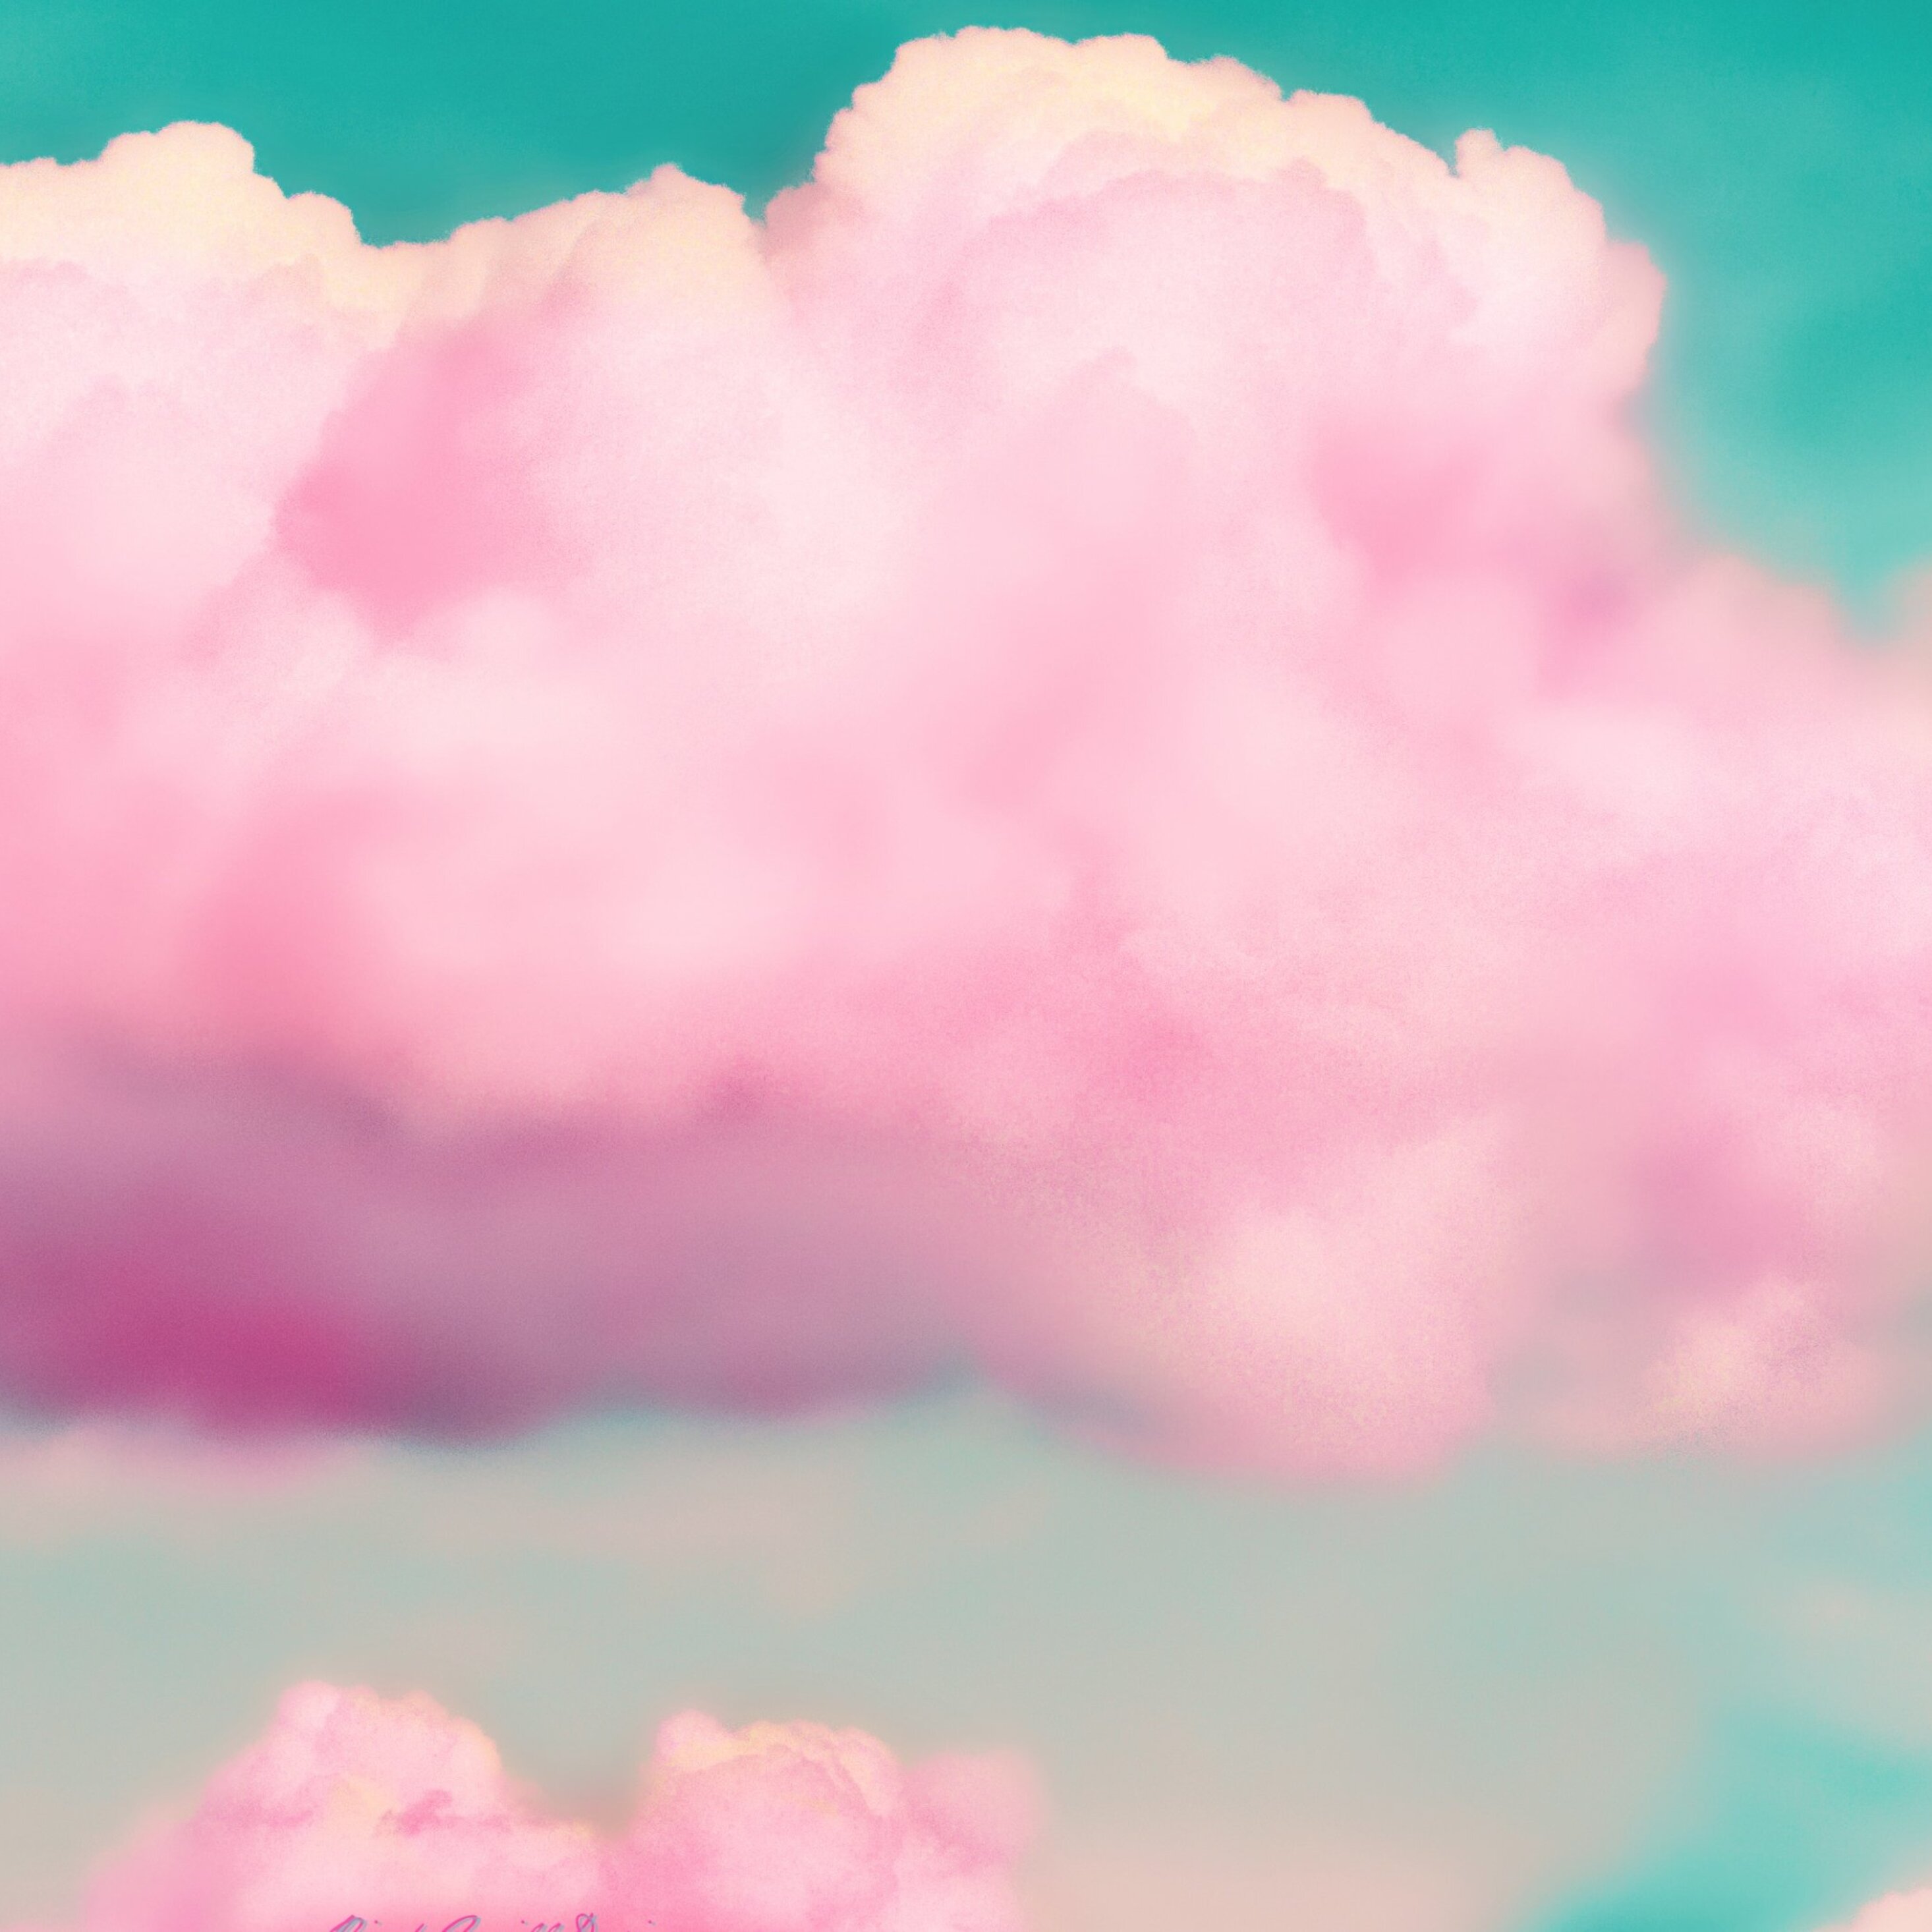 A cotton candy cloud in a blue sky - Cloud, 3D